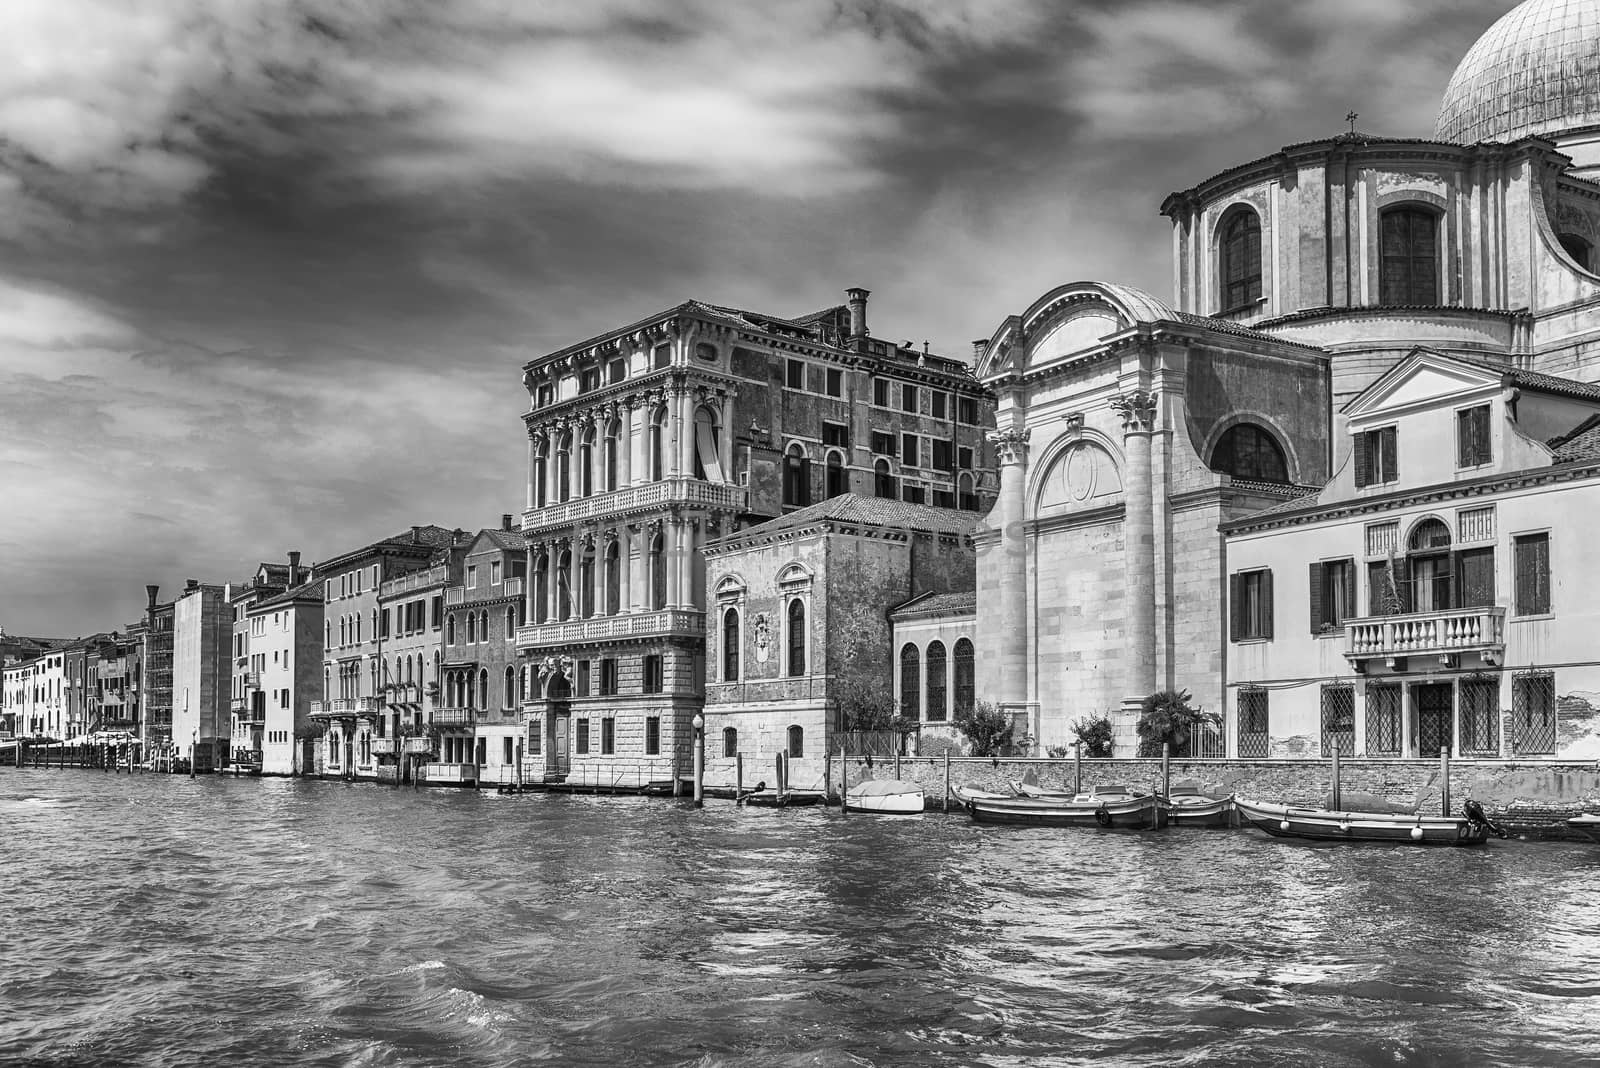 Scenic architecture along the Grand Canal in Venice, Italy by marcorubino